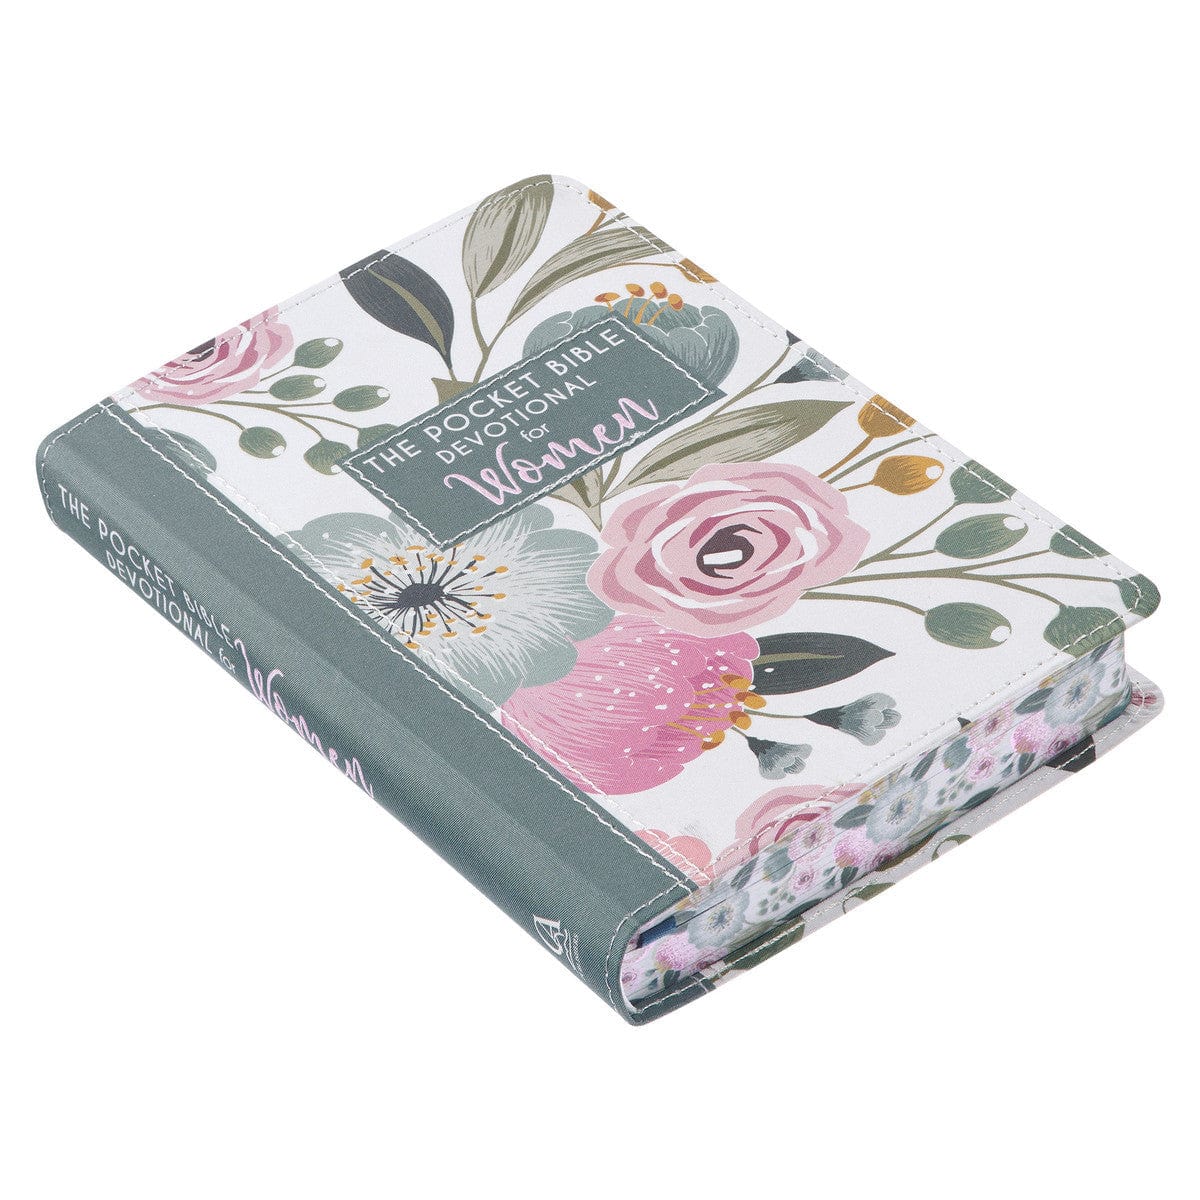 Stationery Devotional - Pocket Bible Devotional For Women - 366 Daily Readings CA-PBD002